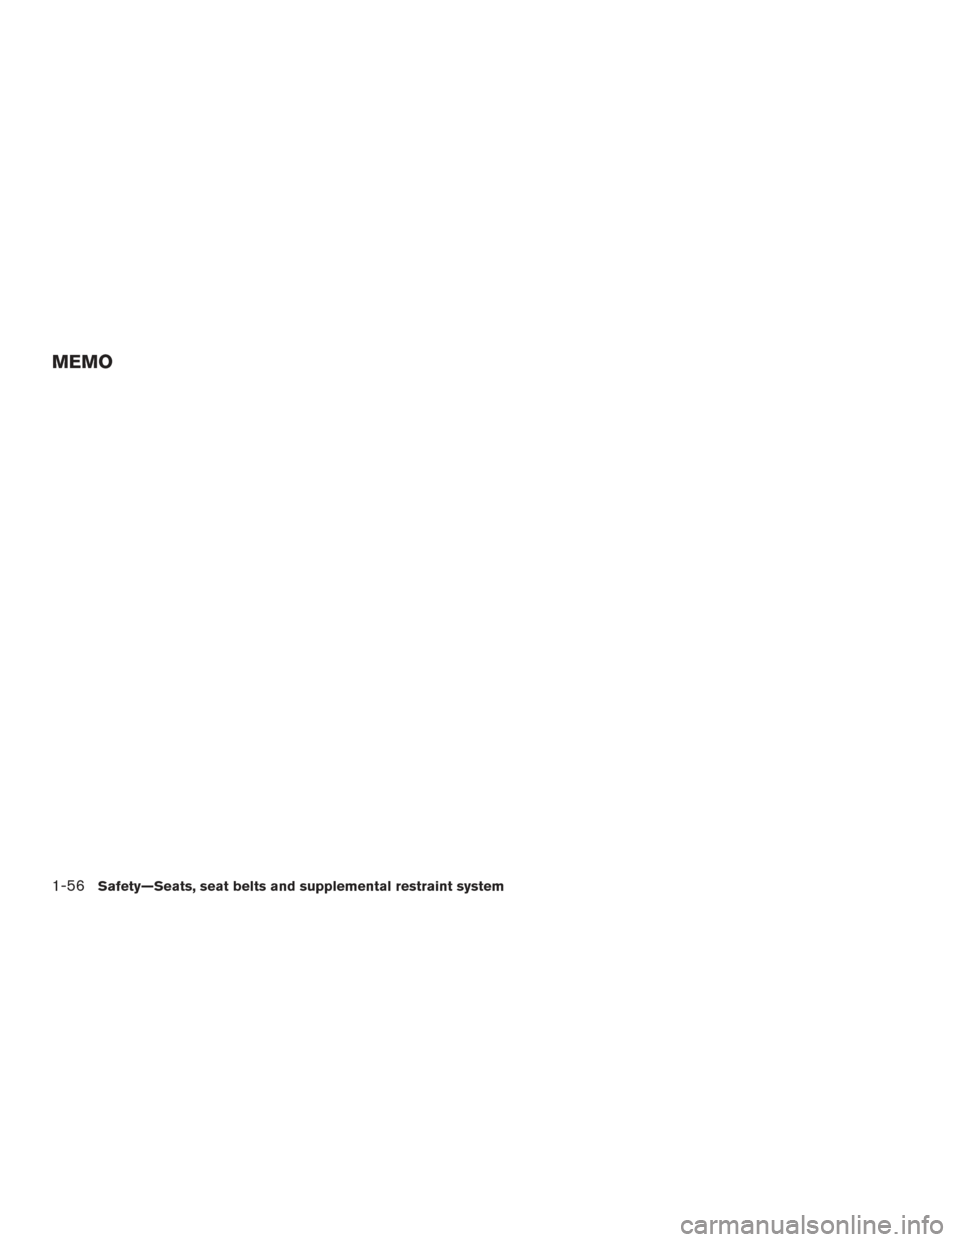 NISSAN VERSA SEDAN 2015 2.G Manual PDF MEMO
1-56Safety—Seats, seat belts and supplemental restraint system 